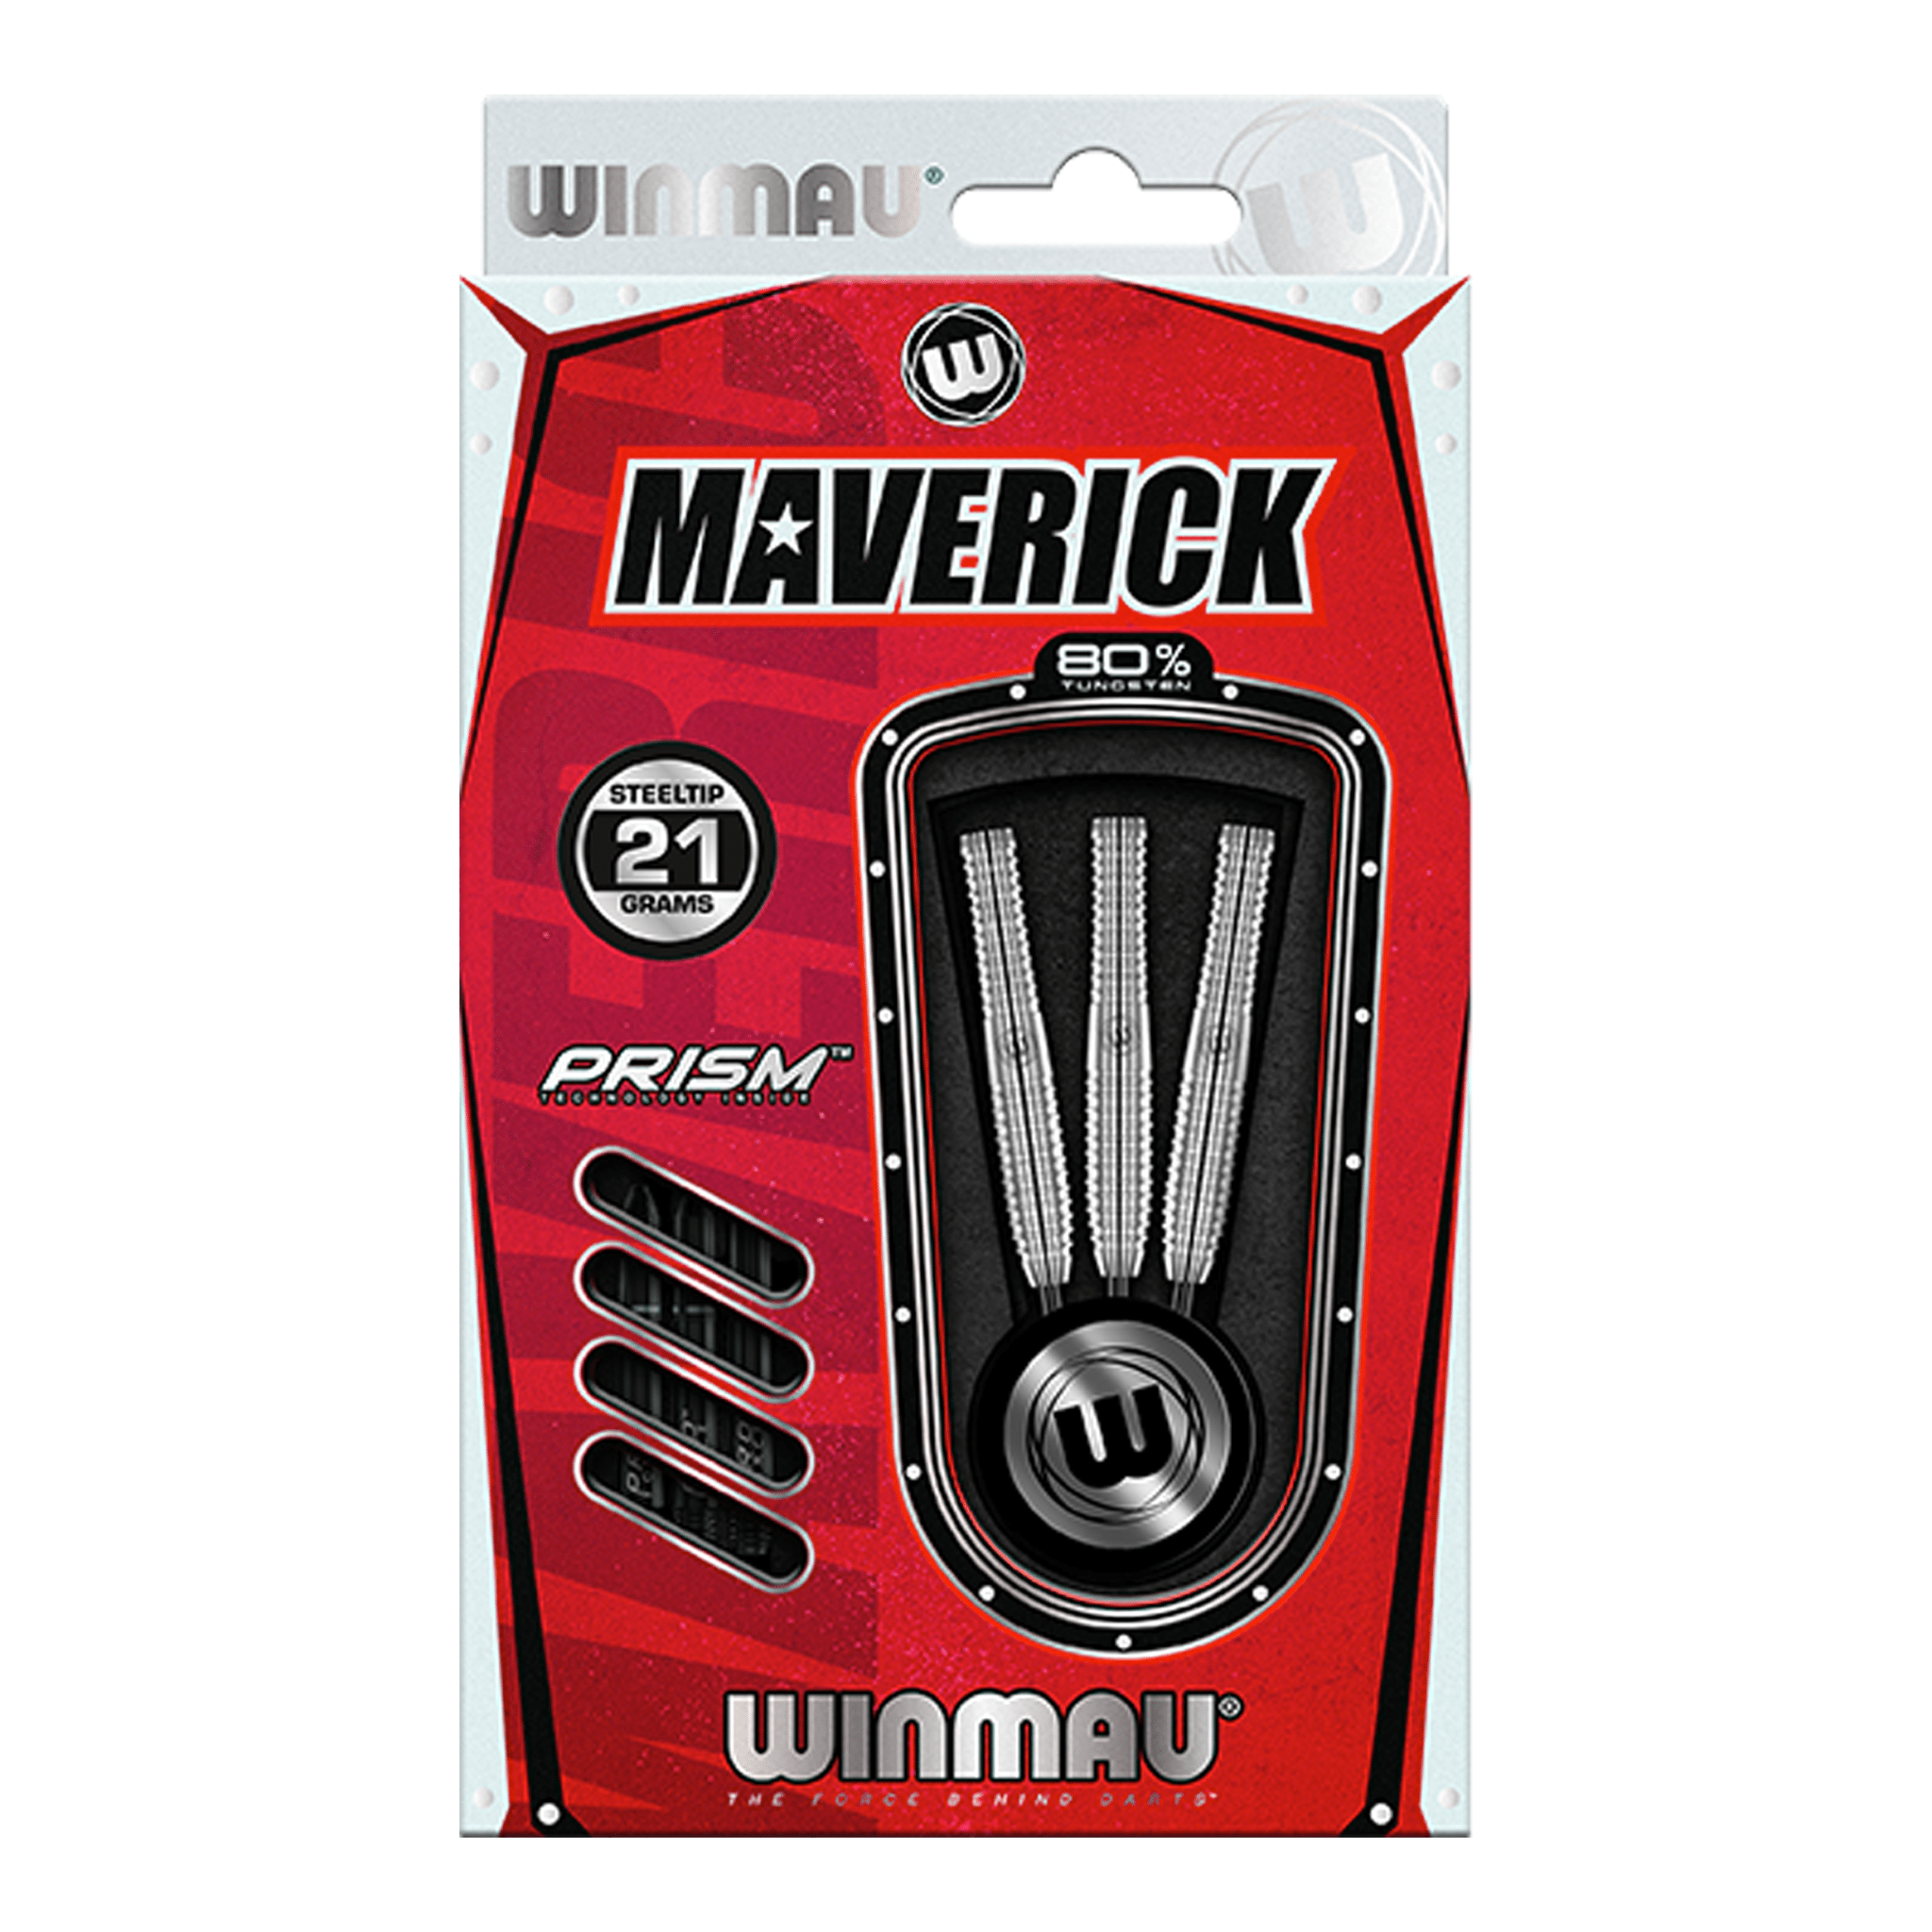 Winmau Maverick - 80% Tungsten Steel Tip Darts Darts